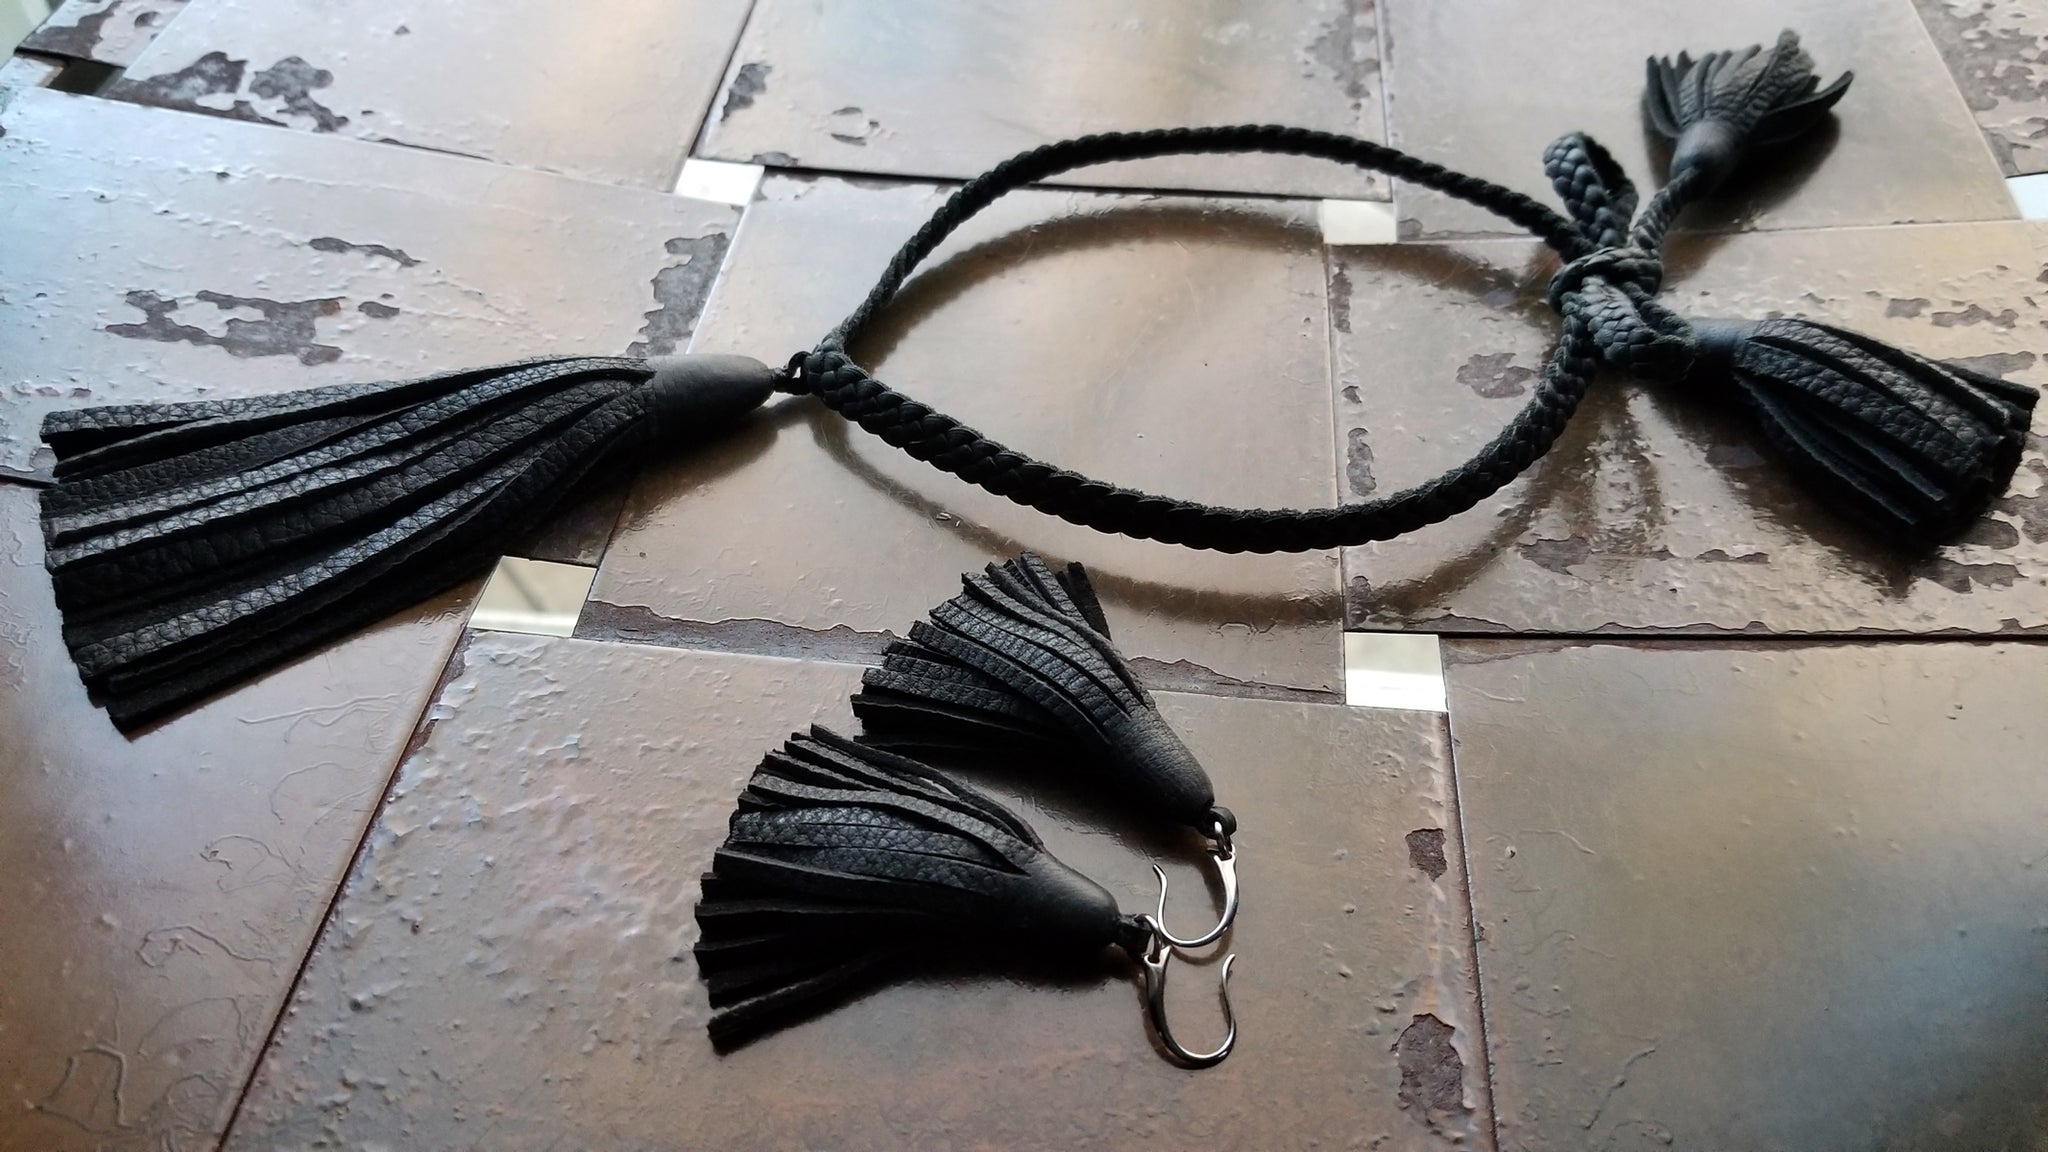 Tilu Leather Tassel Necklace and Earrings in black deerskin leather